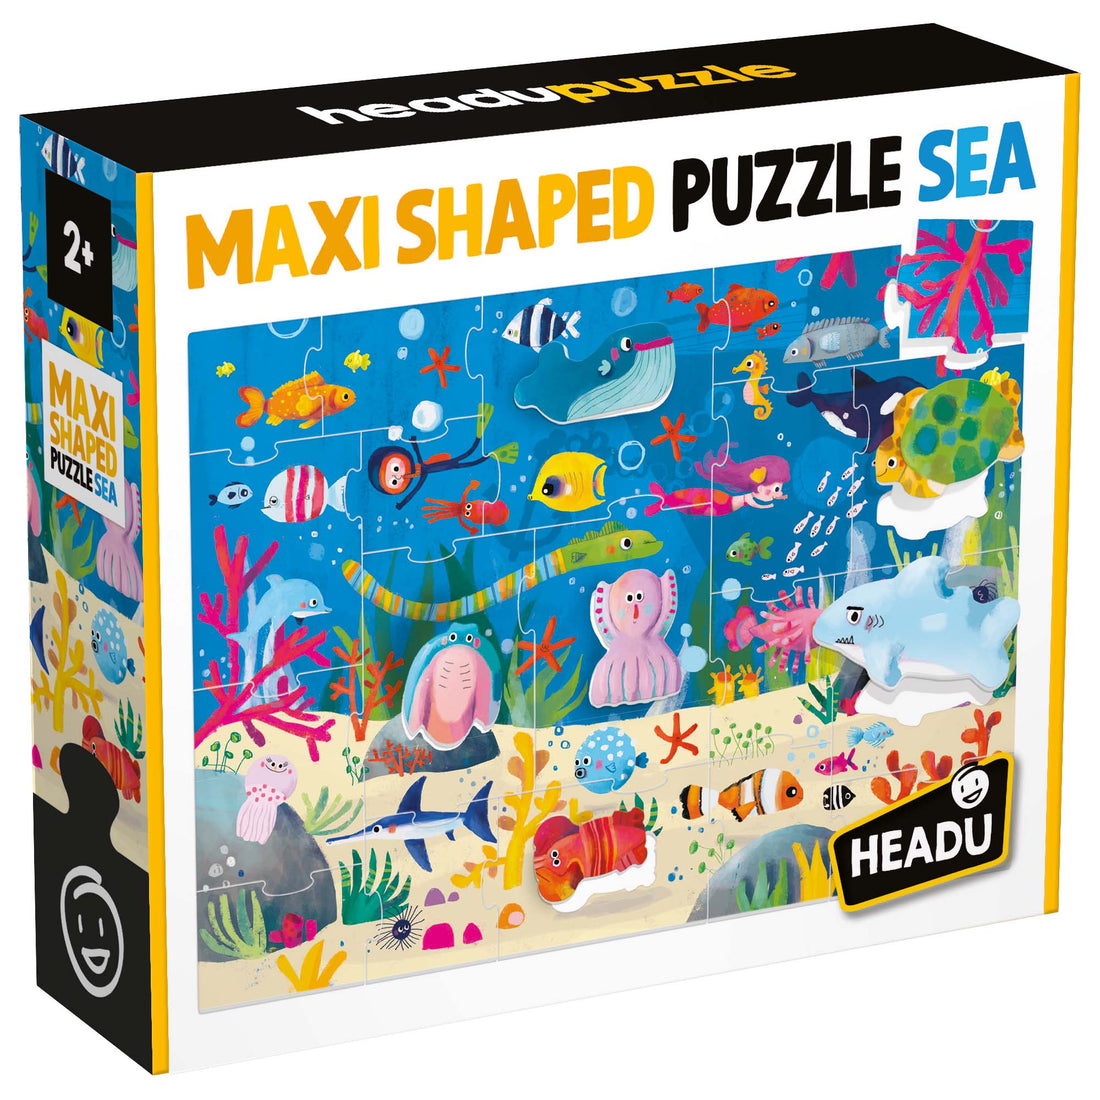 Ecoplay - Shaped Puzzle Sea